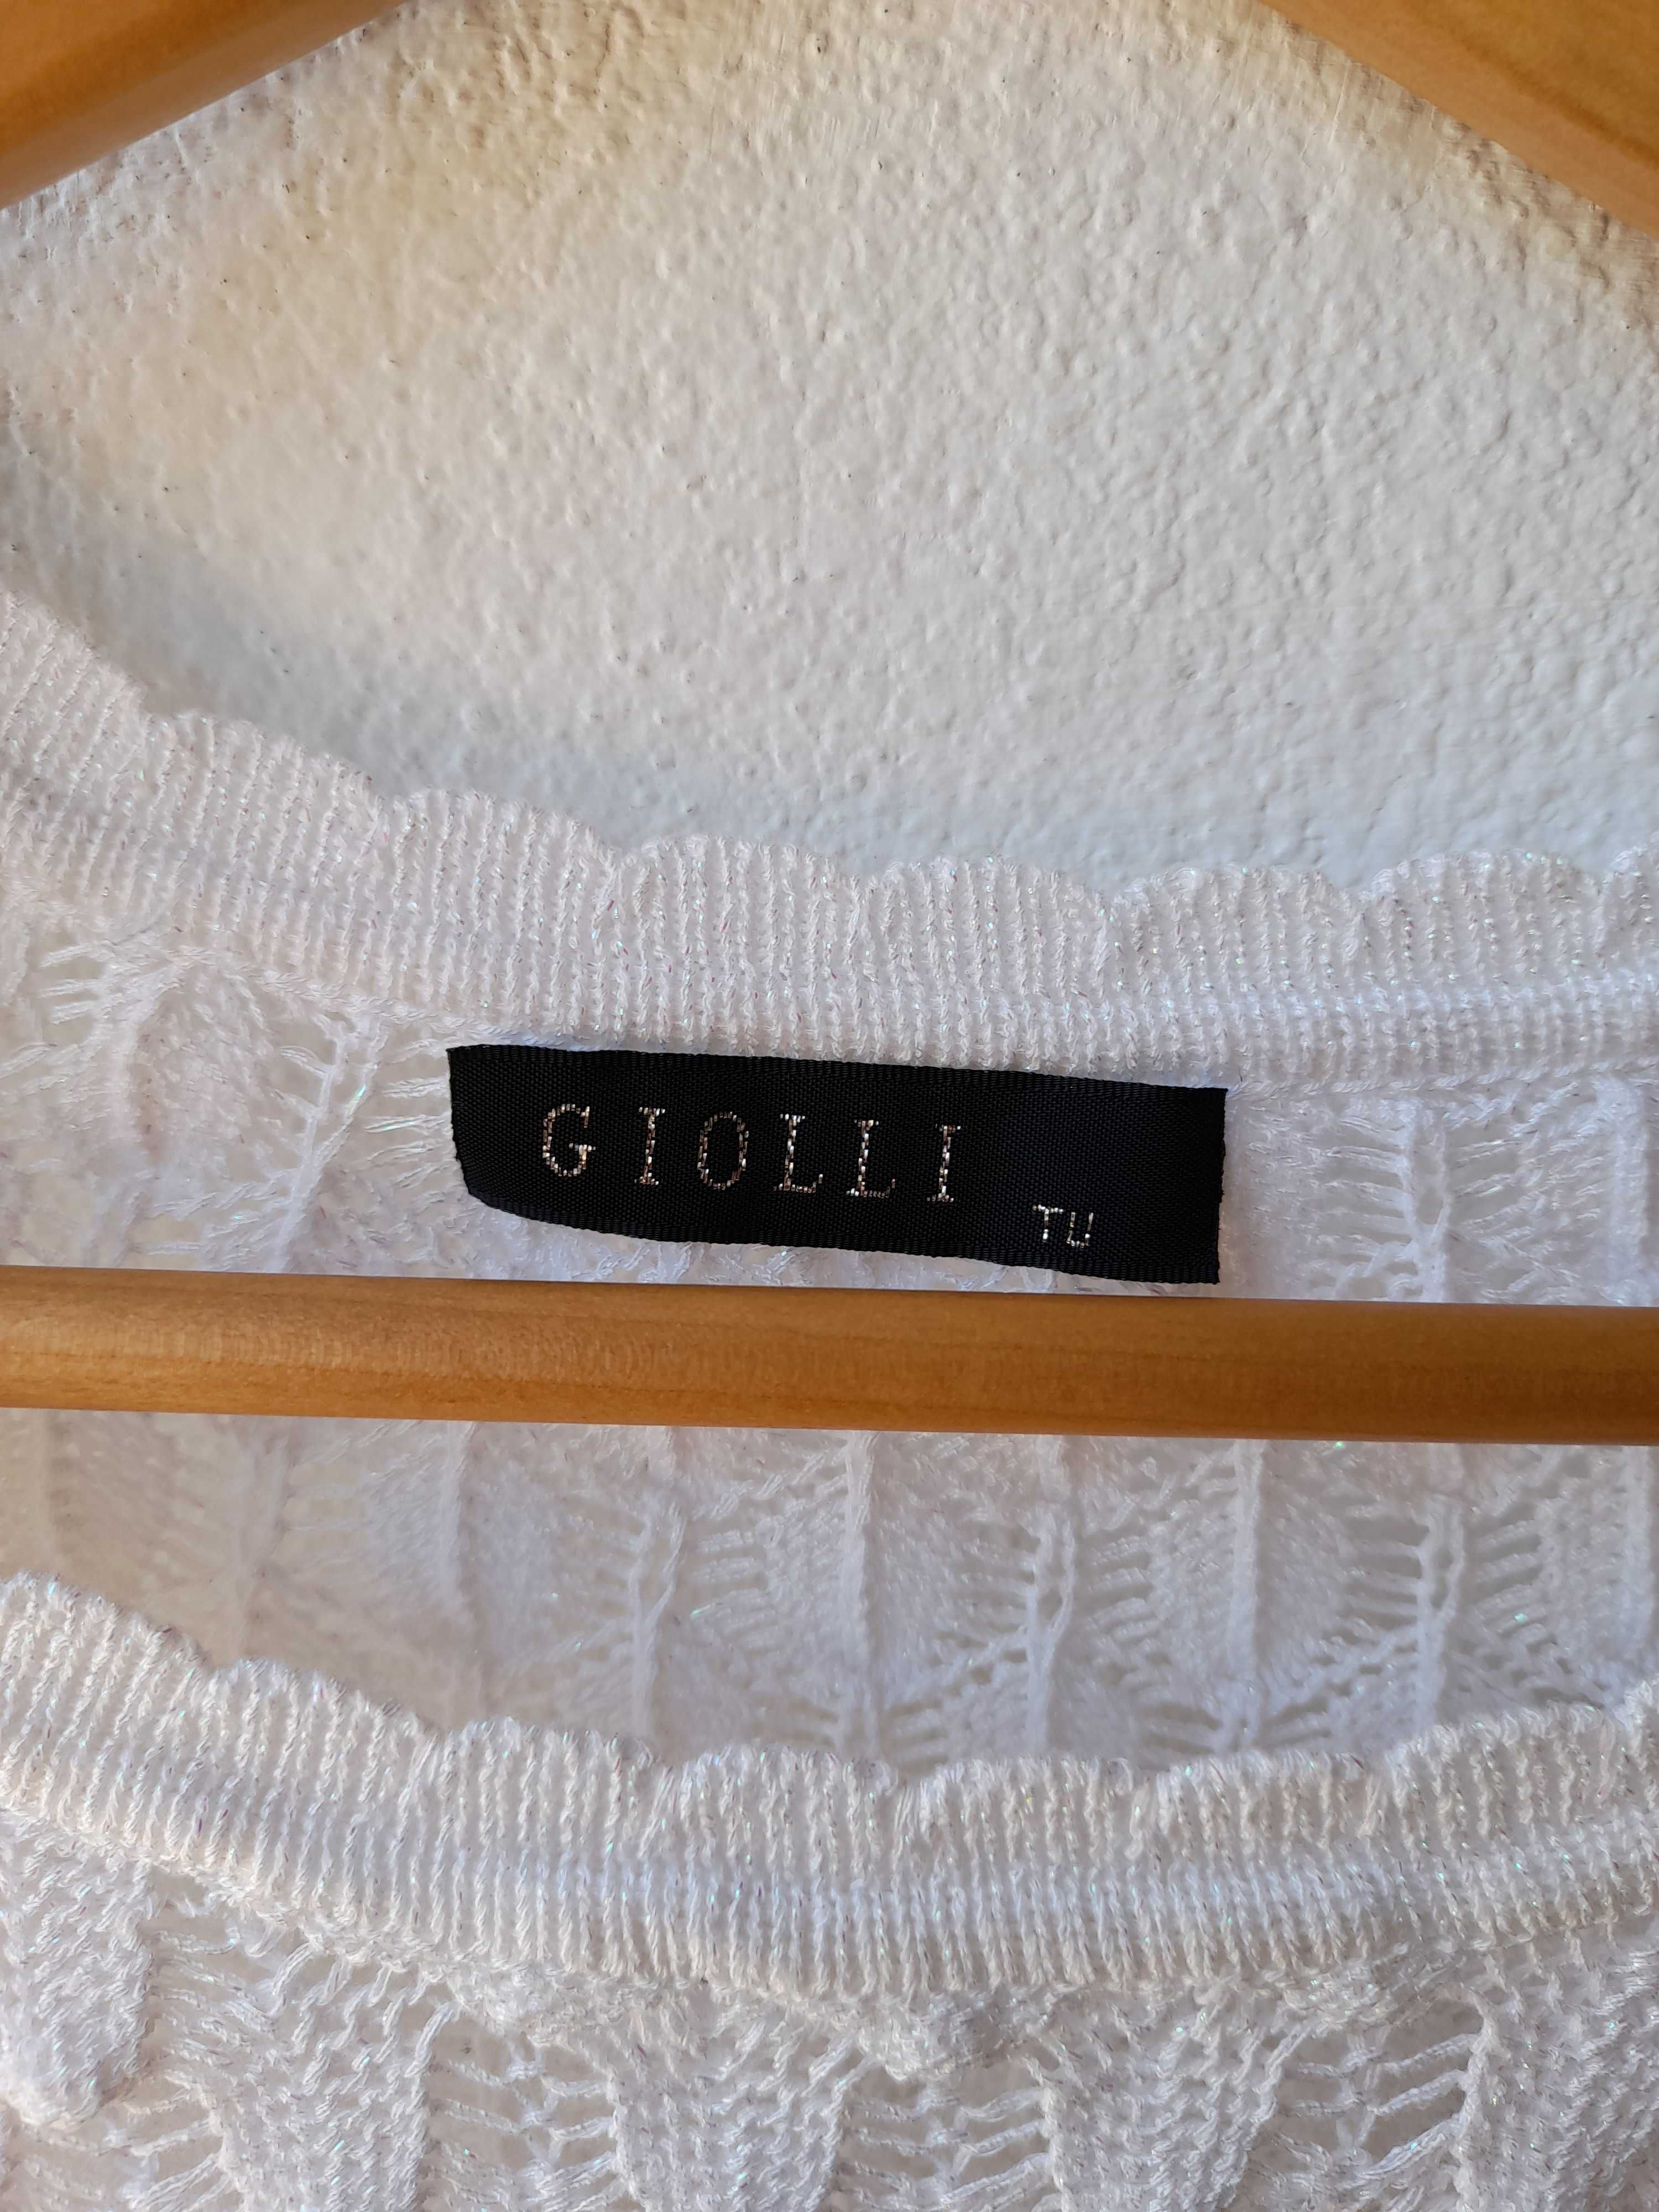 Camisola de malha brilhante, estilo borboleta da Giolli - Nunca usada